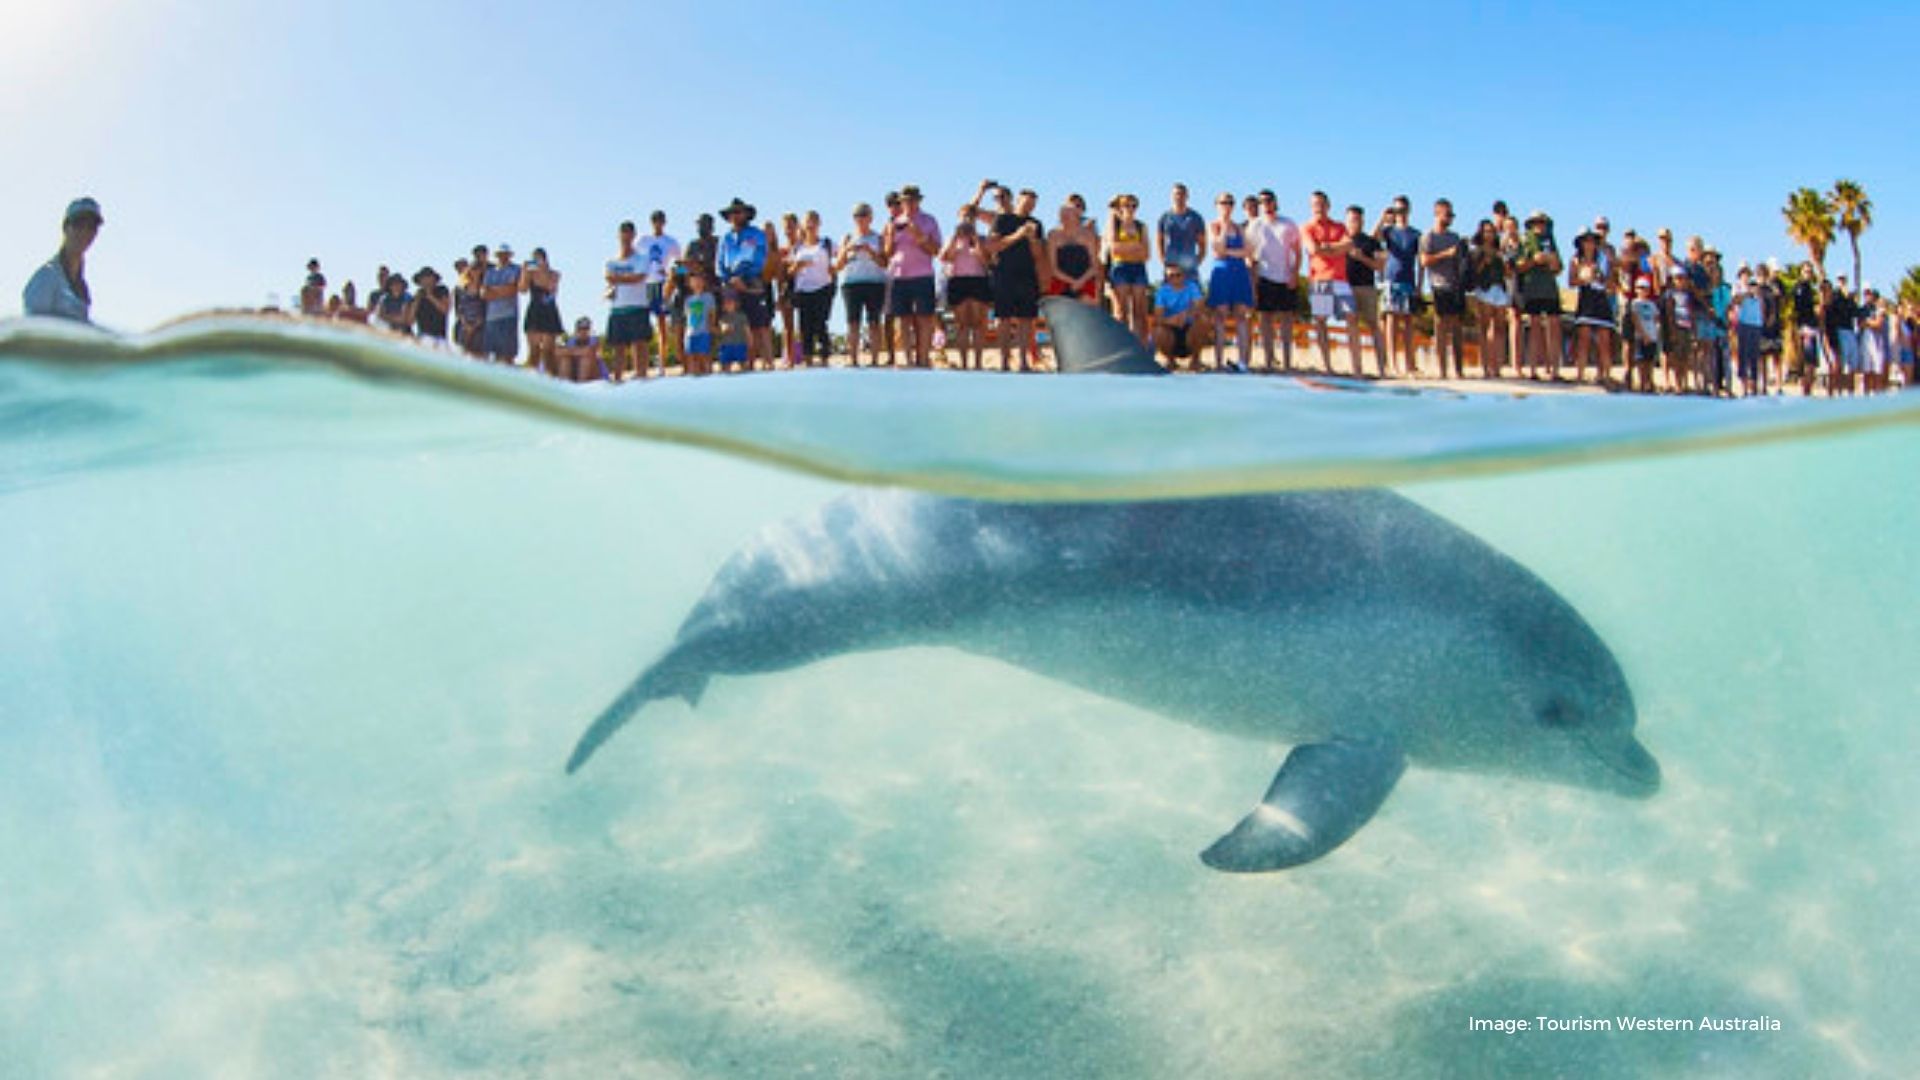 Dolphin under water while crowd on beach watches | Tourism Western Australia